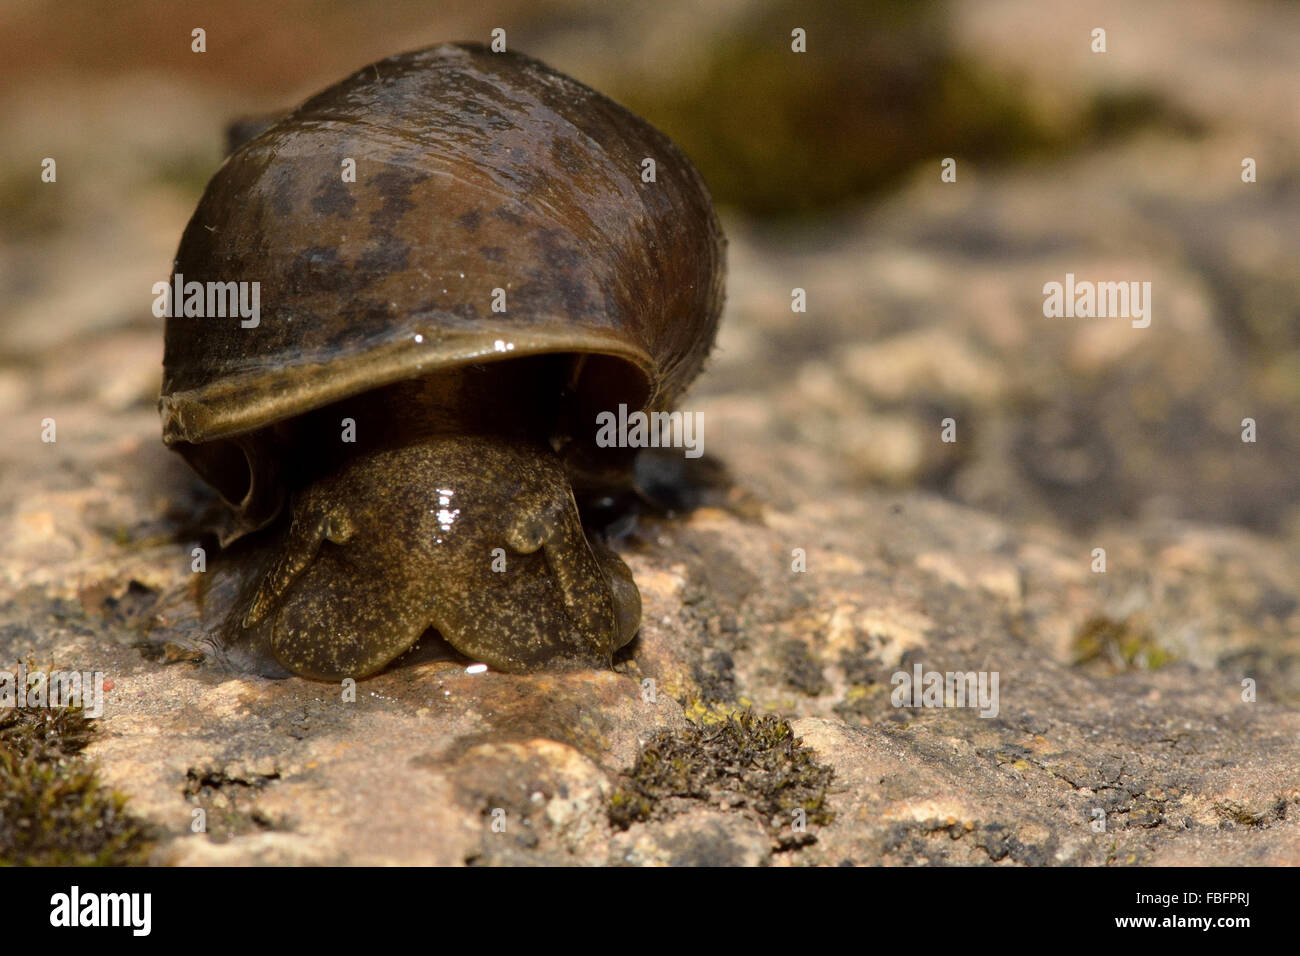 Grand Étang snail (Lymnaea stagnalis). Un gastéropode aquatique dans la famille Lymnaeidae, rampant vers la caméra Banque D'Images